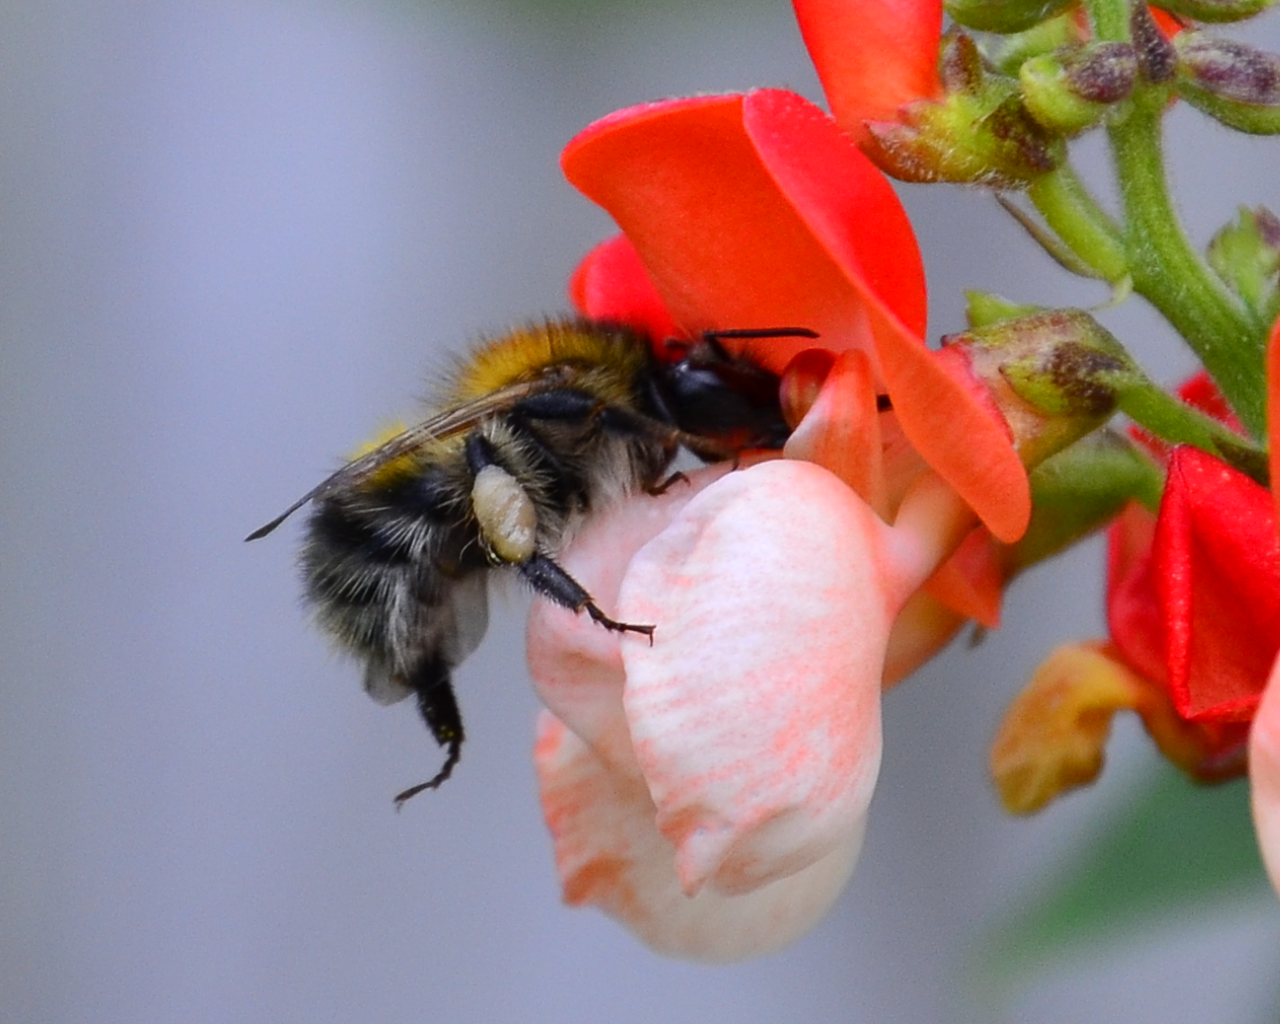 Bee on a runner bean flower